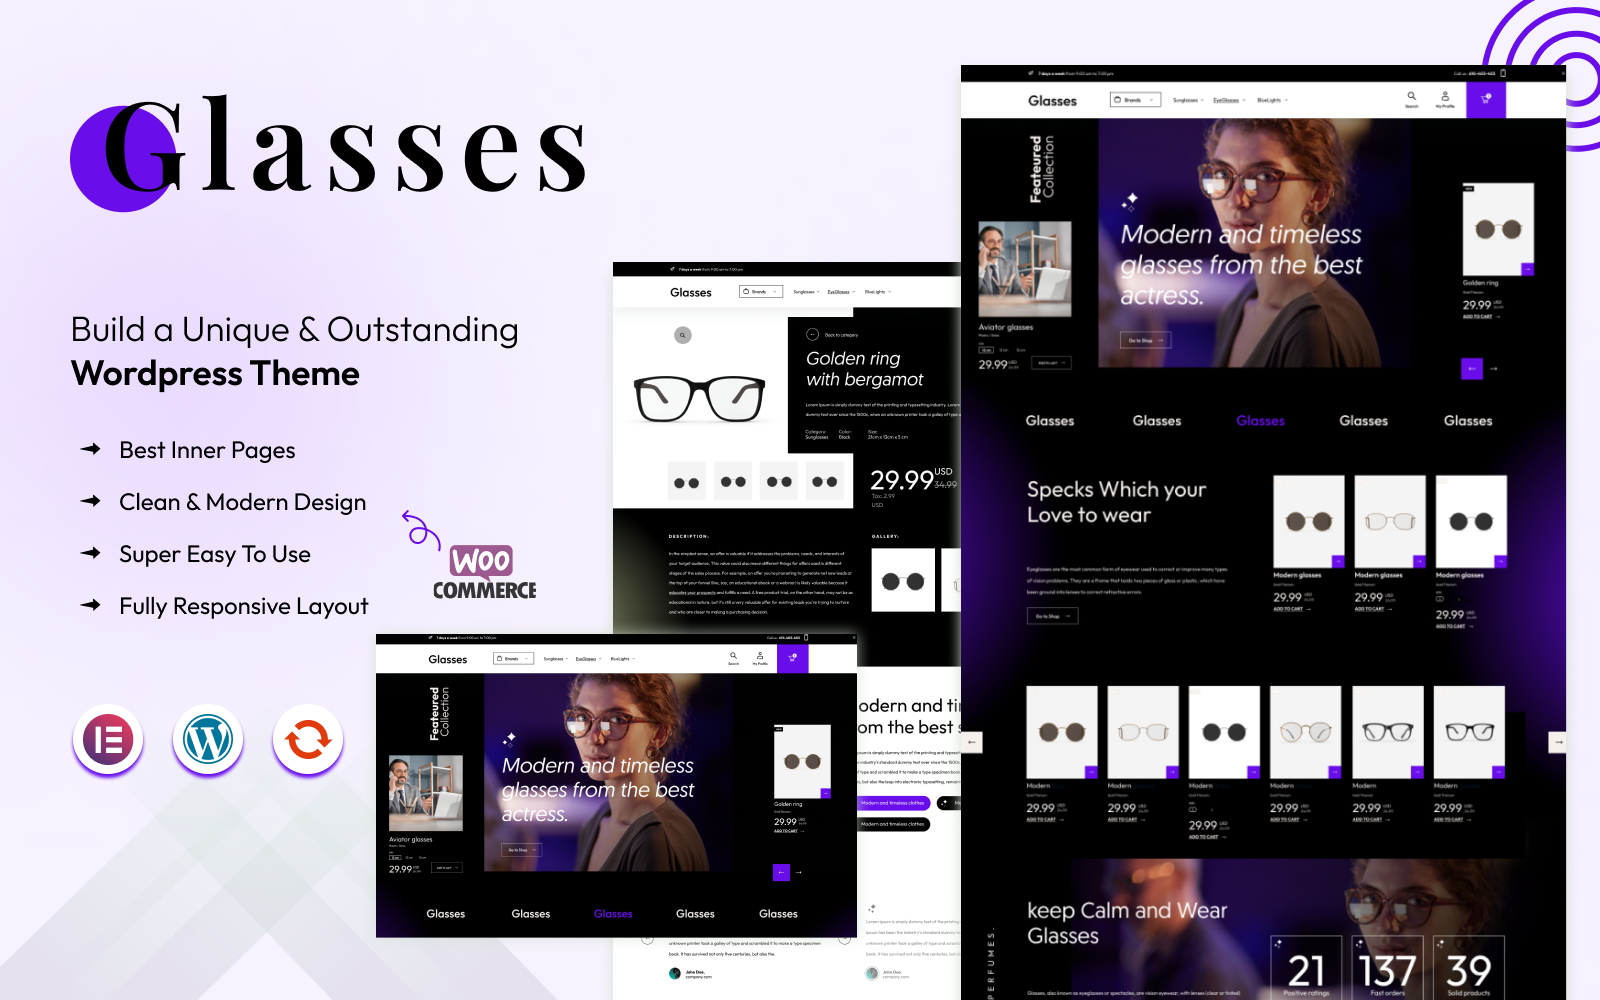 Glasses - Eyewear MegaShop WordPress Theme